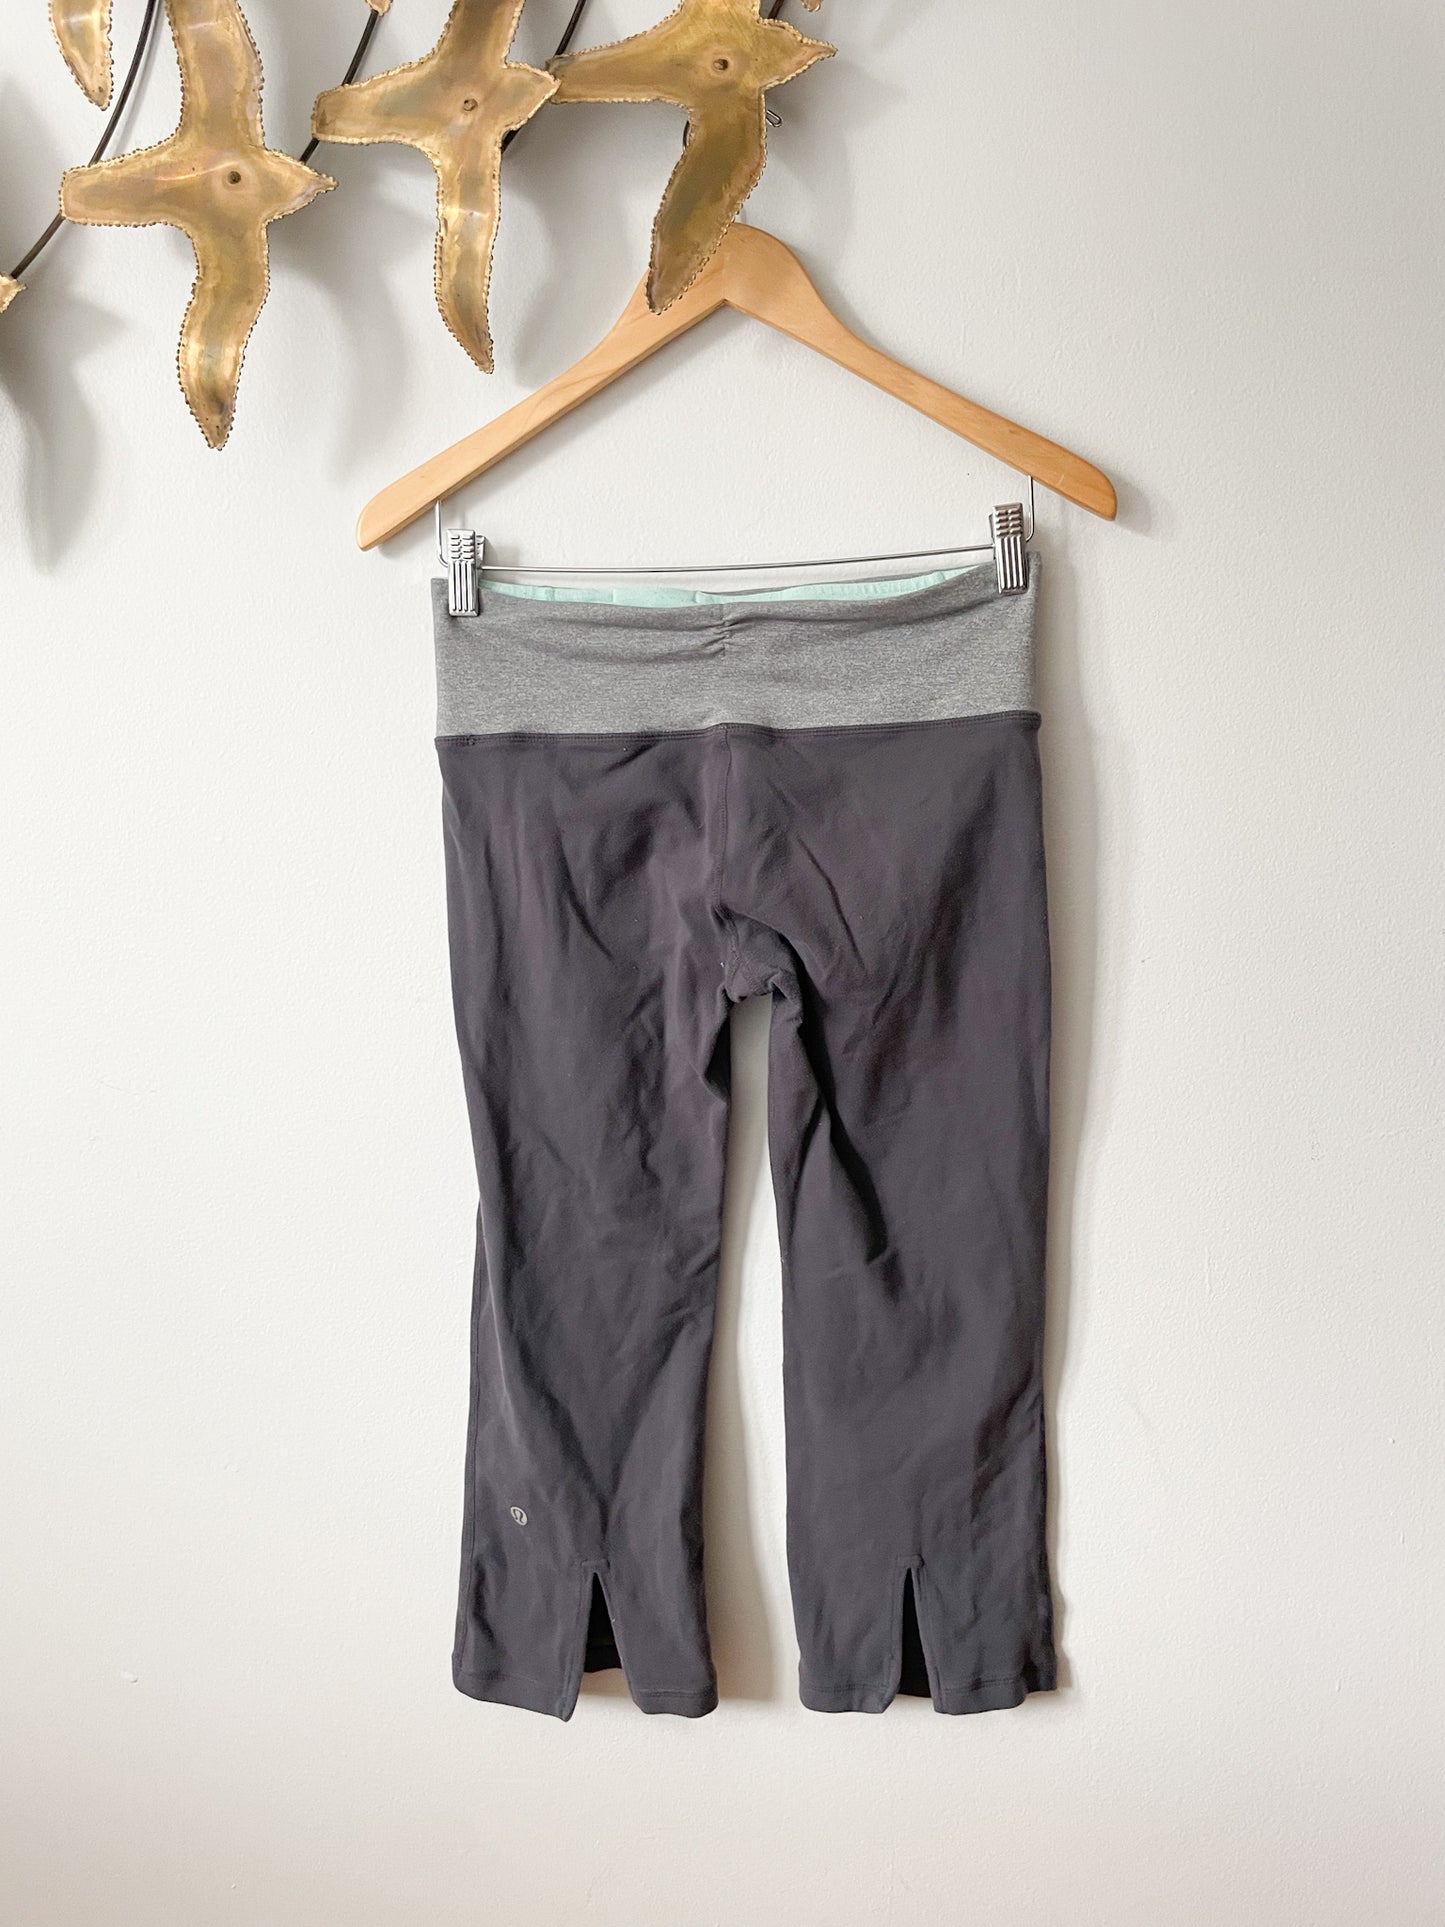 Athletic Pants By Lululemon Size: 6